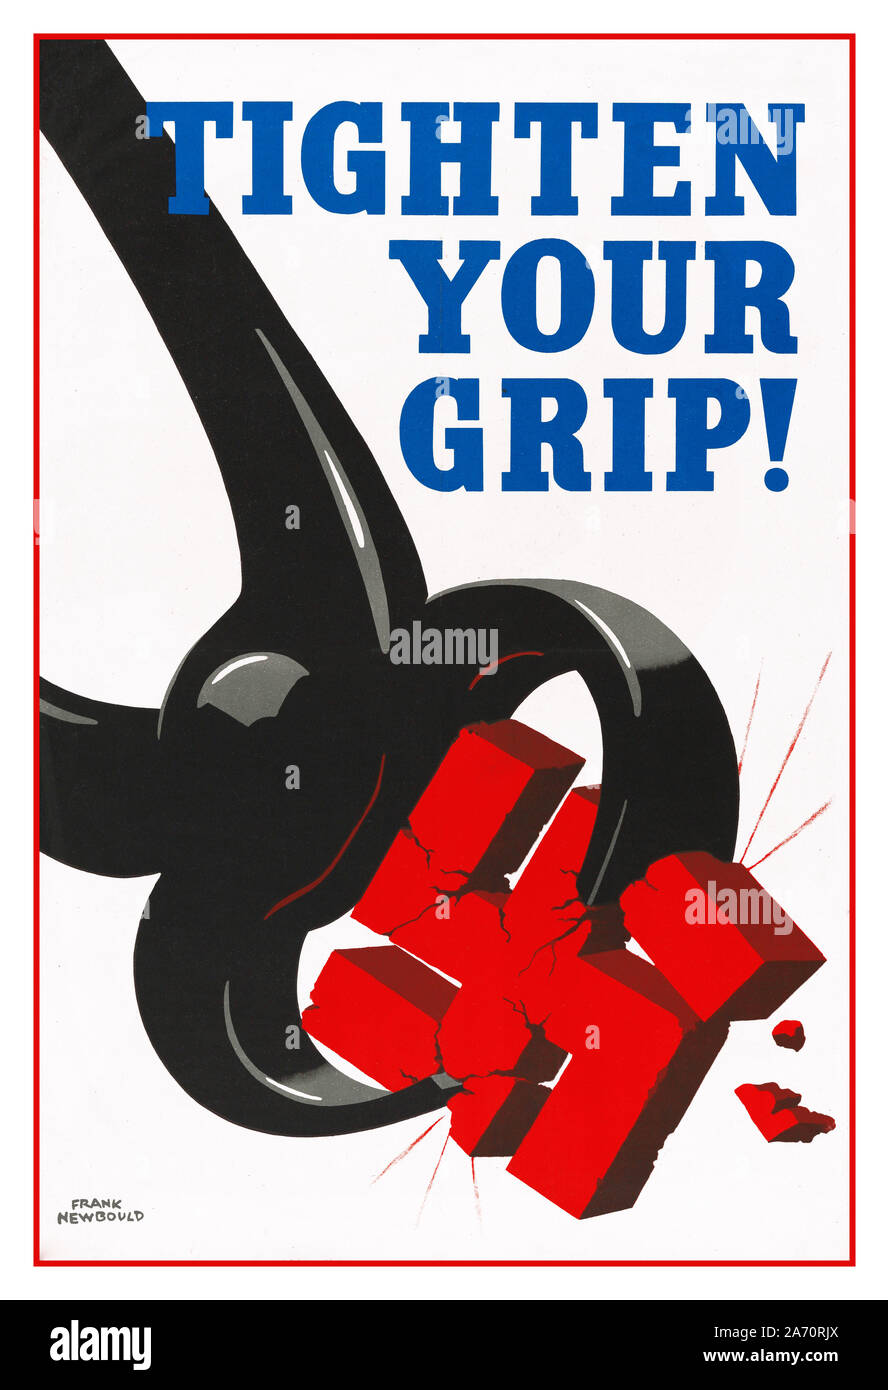 1940’s WW2 UK propaganda poster, “Tighten your grip!” Red Swastika Crushed in a metal grip 1939-1945, propaganda war poster World War II  FRANK NEWBOULD UK Graphic Artist Stock Photo